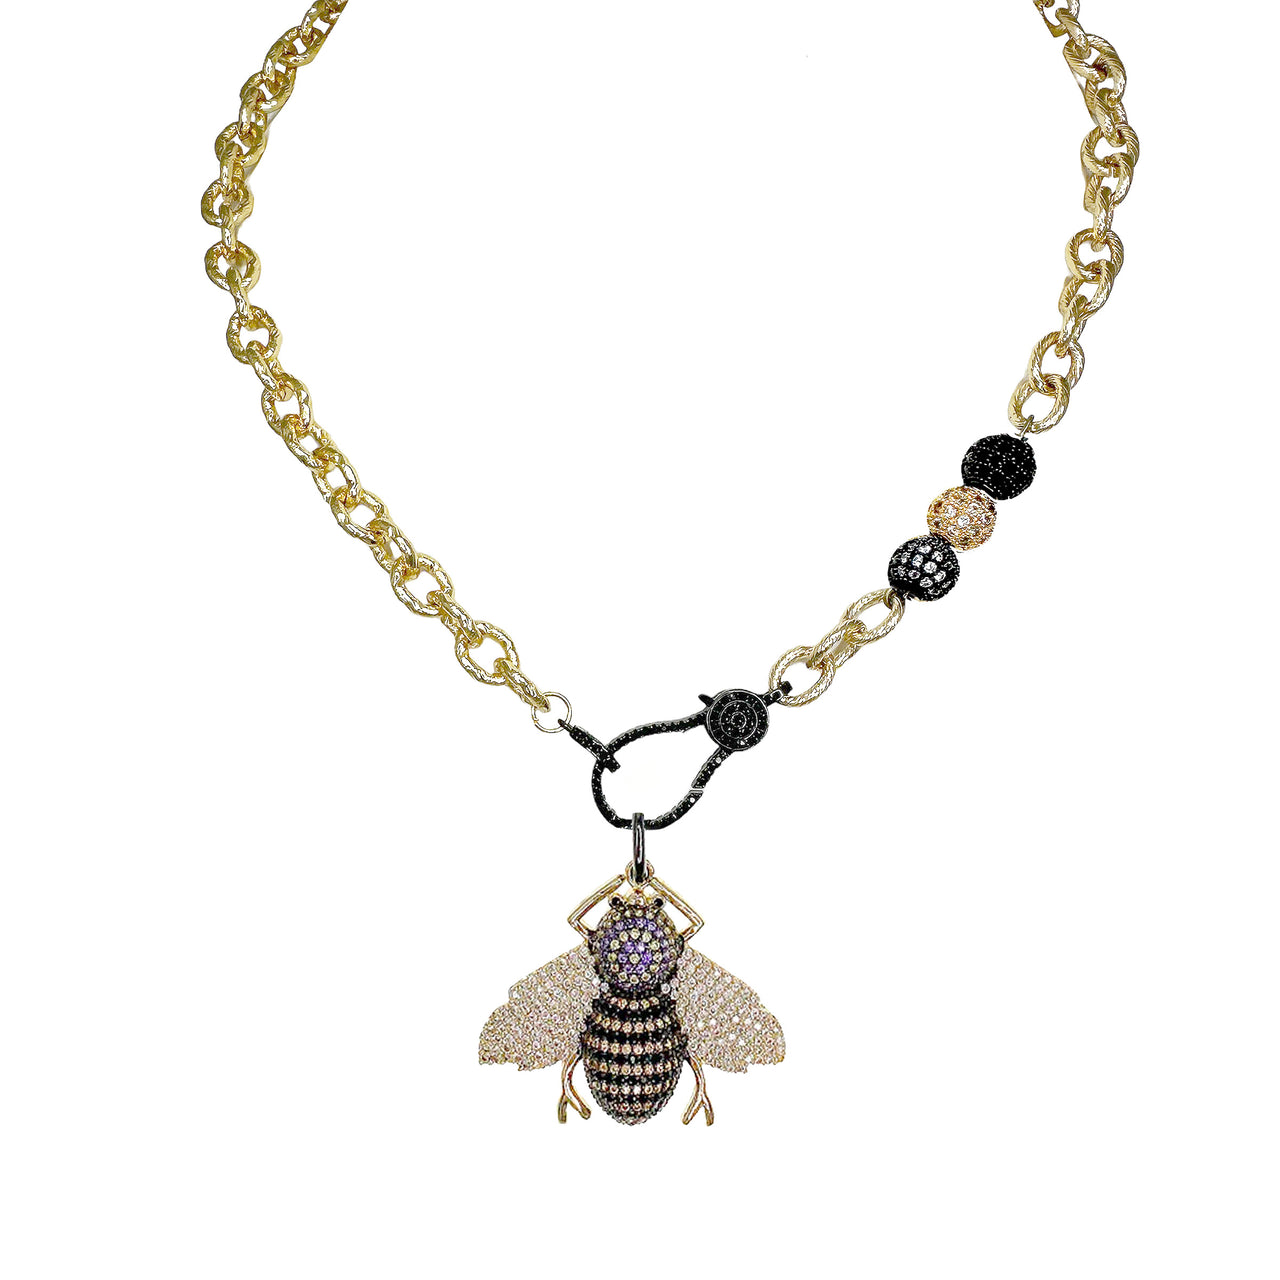 Tina’s Queen Bee Necklace